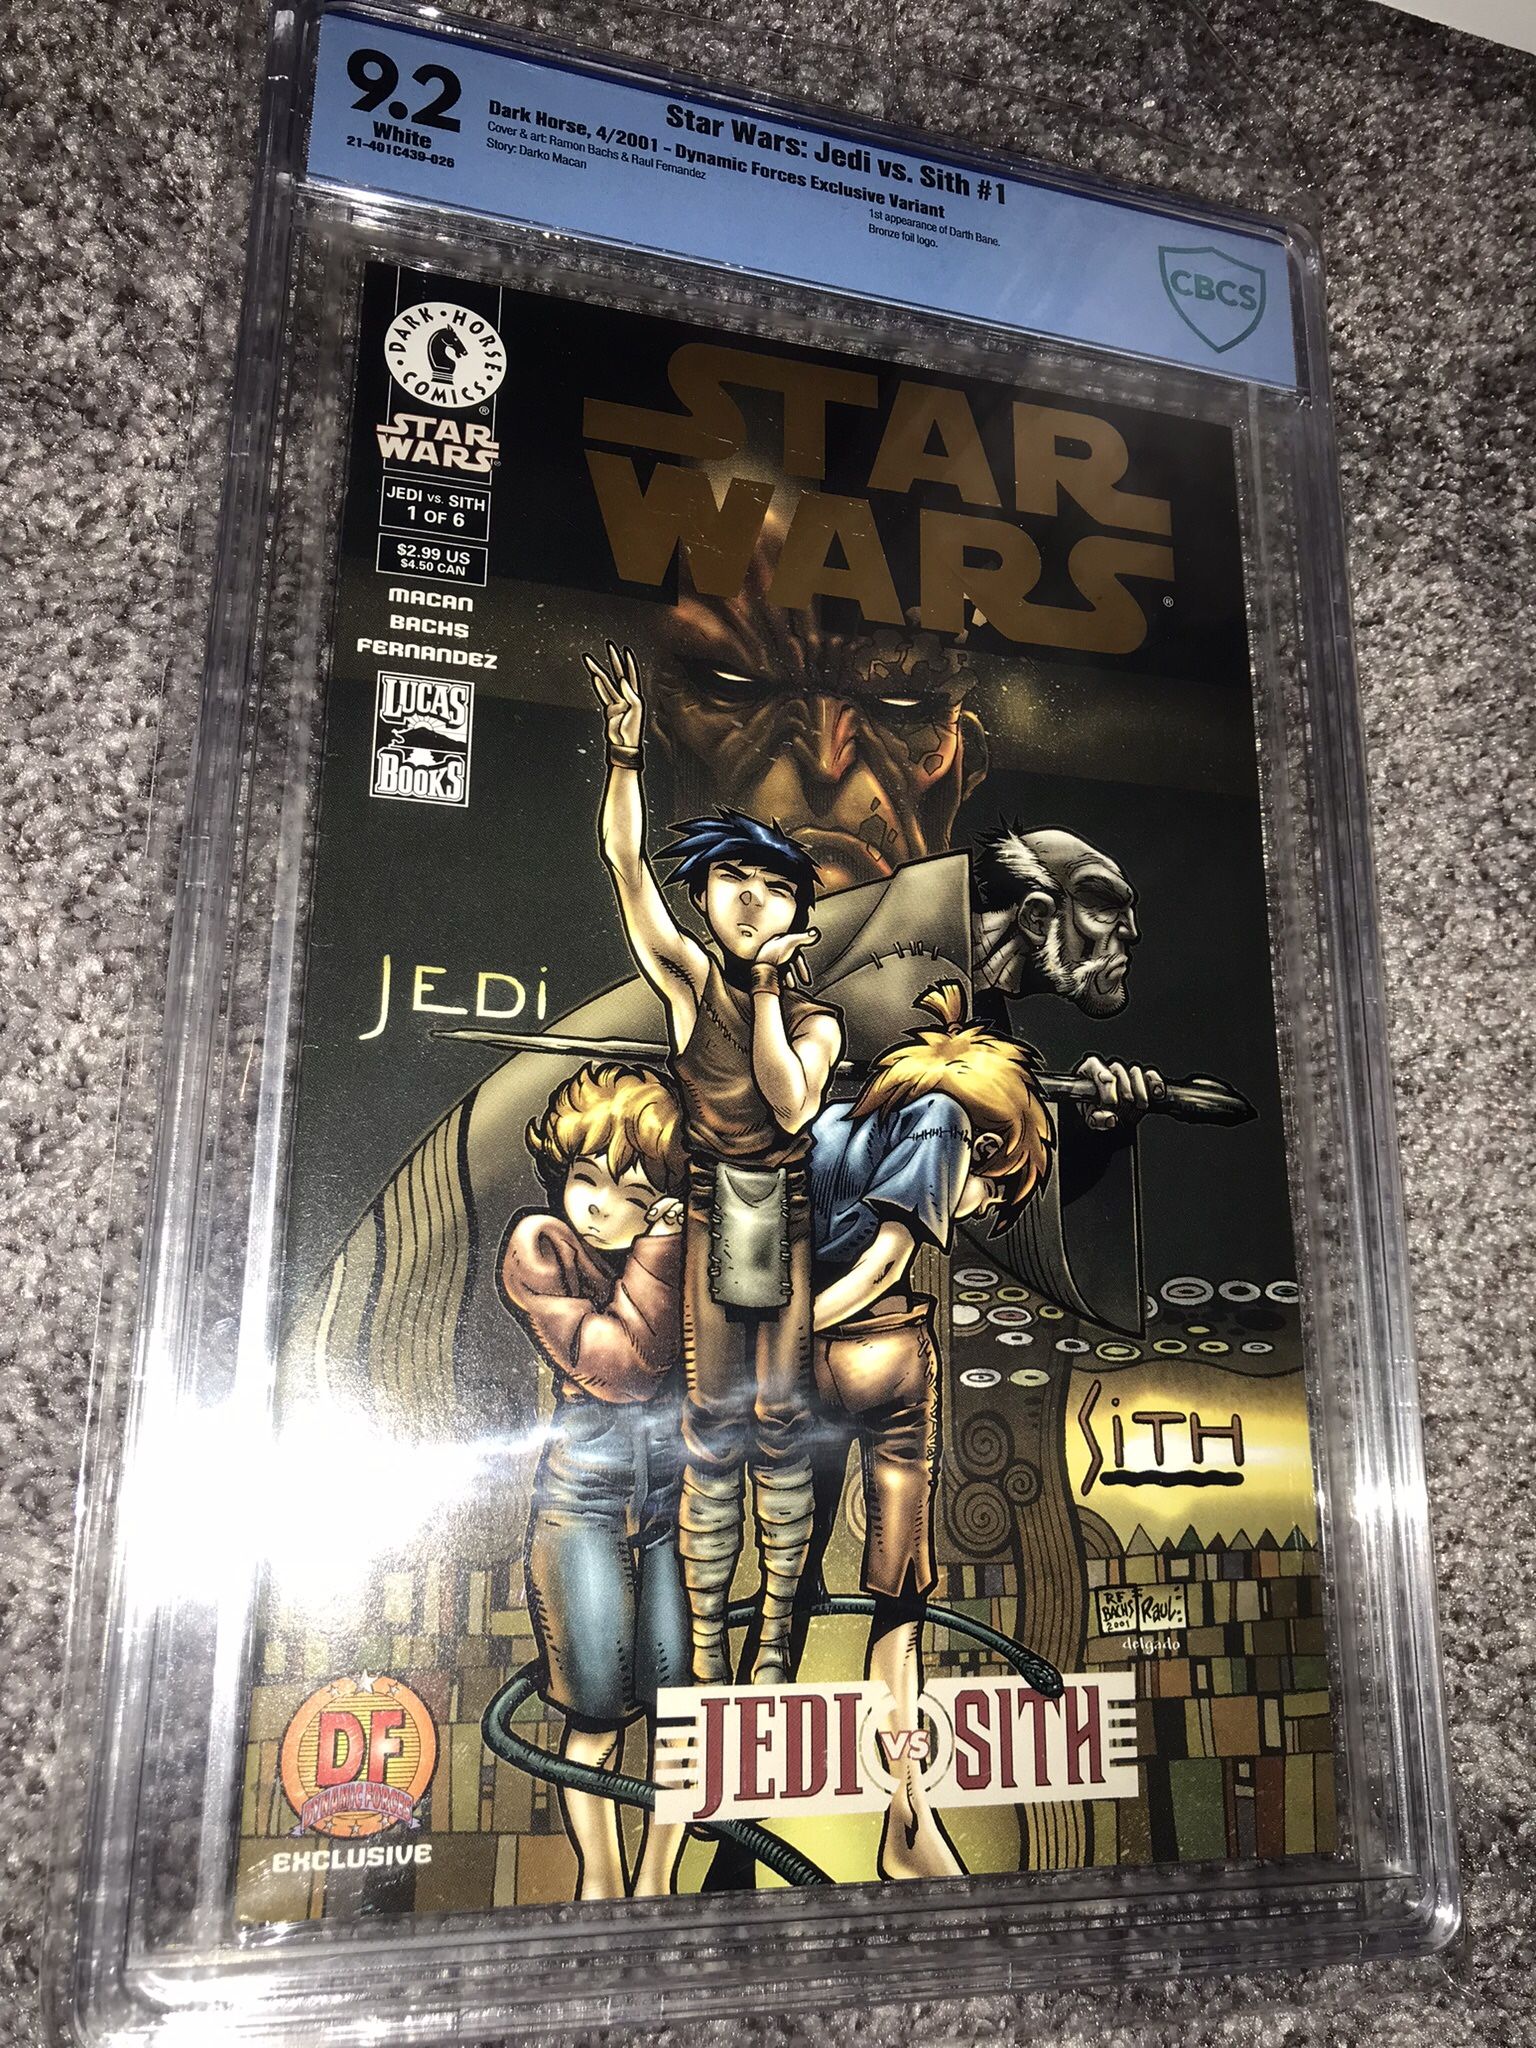 Star Wars Jedi Vs. Sith #1